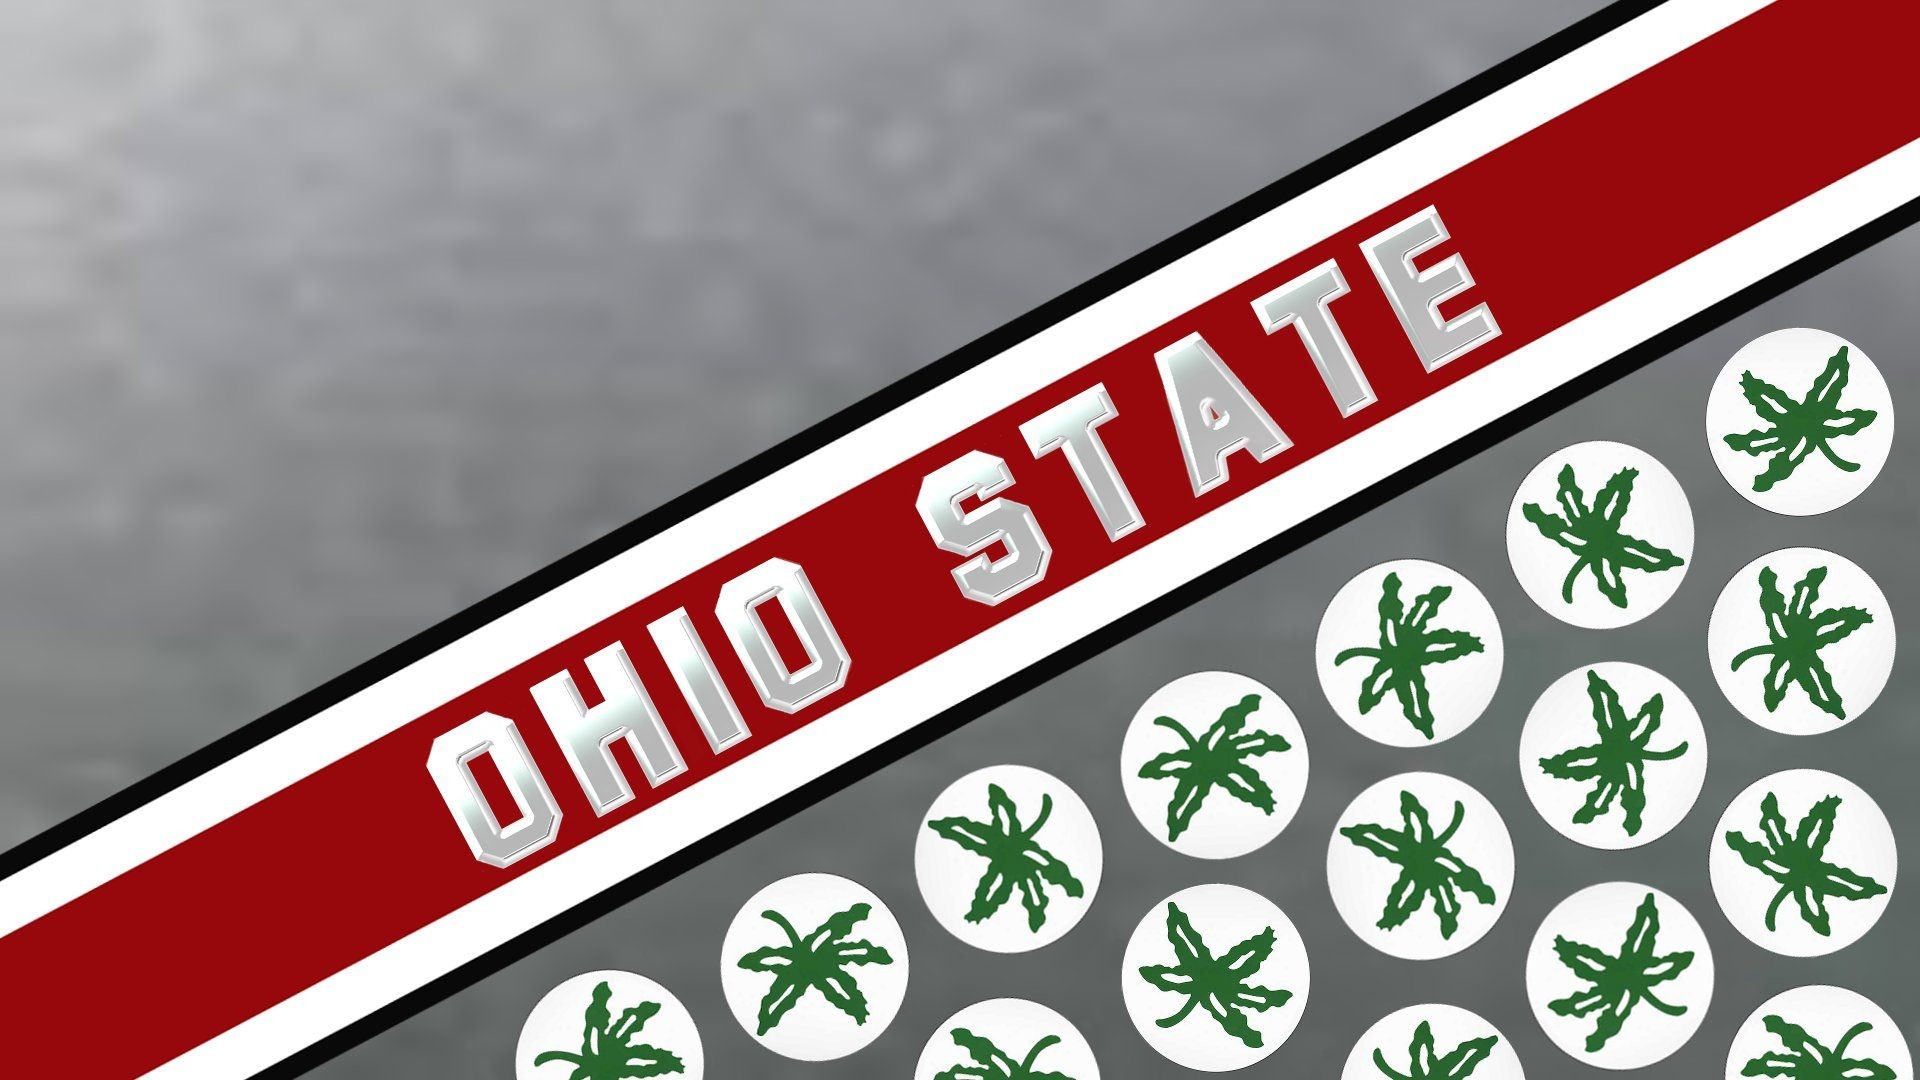 1920x1080 OSU Wallpaper 281 Ohio State Wallpaper, Ohio State Football, Ohio State  Buckeyes, Football